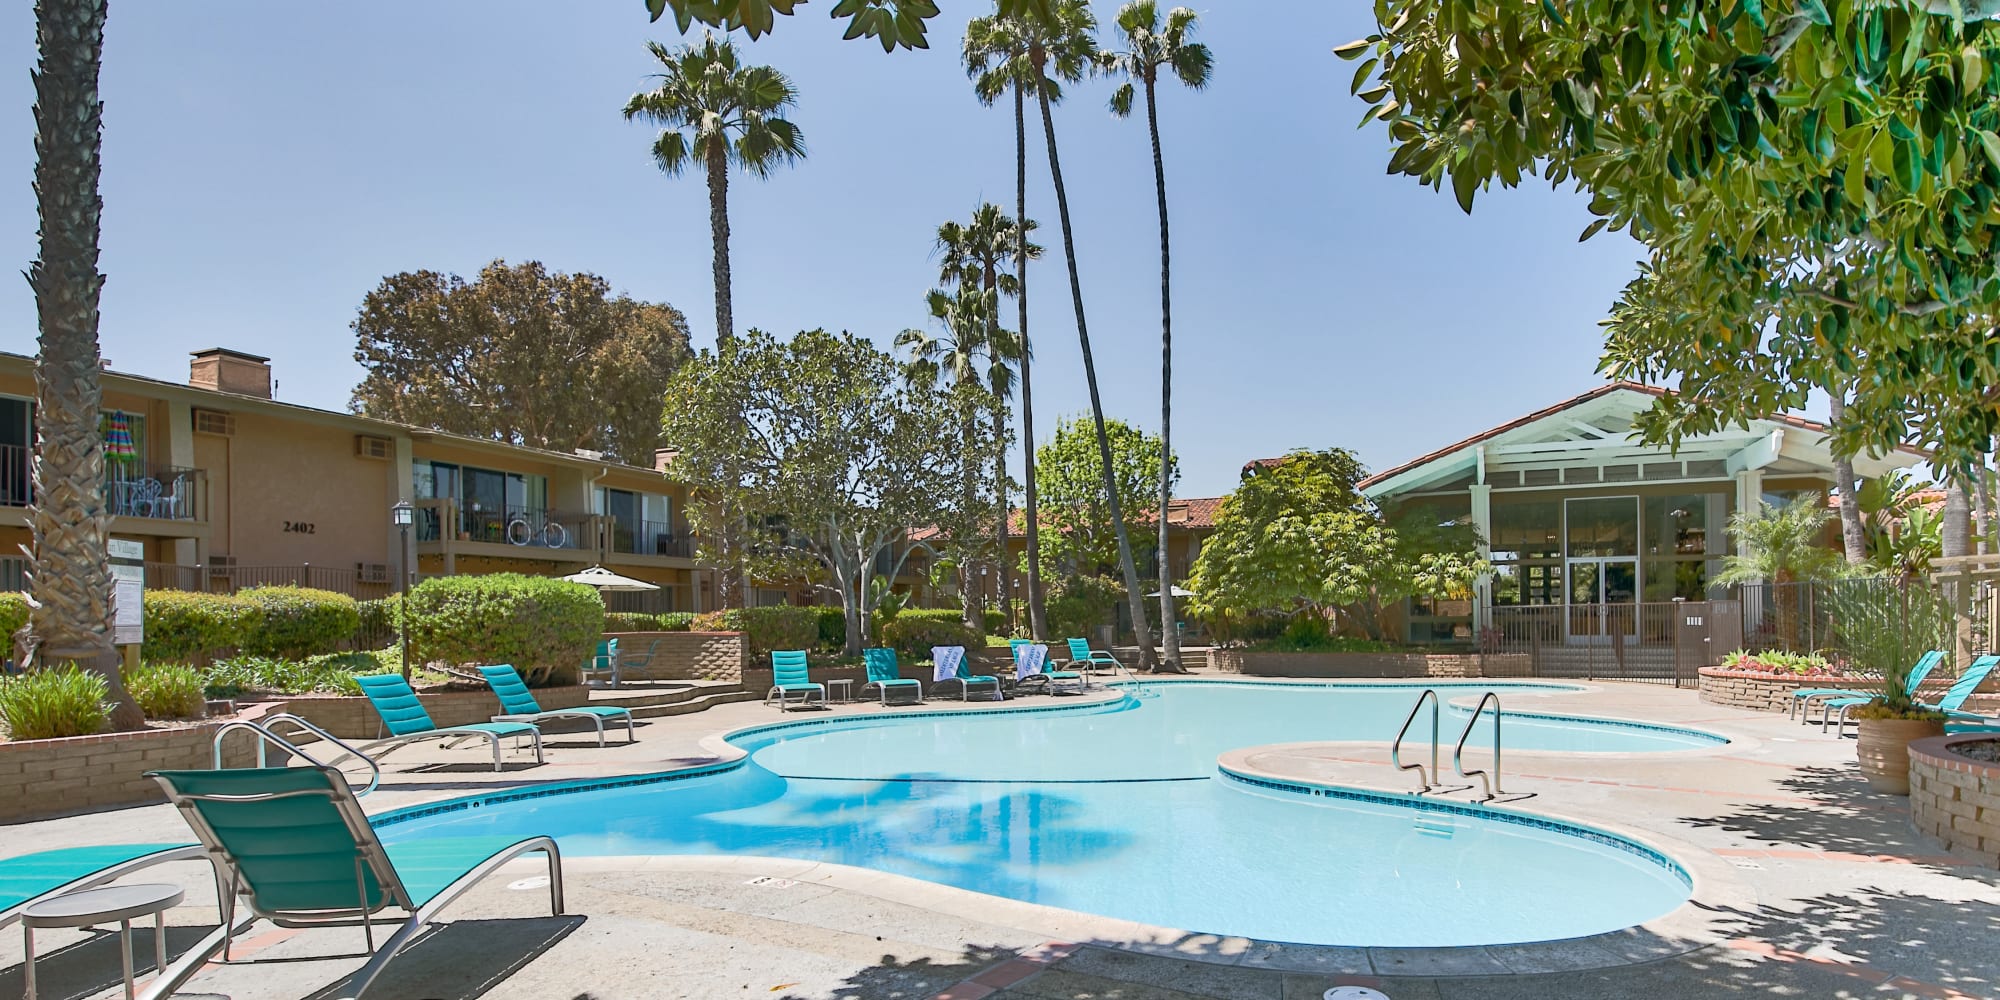 Enjoy a large resident swimming pool at Mediterranean Village Apartments in Costa Mesa, California